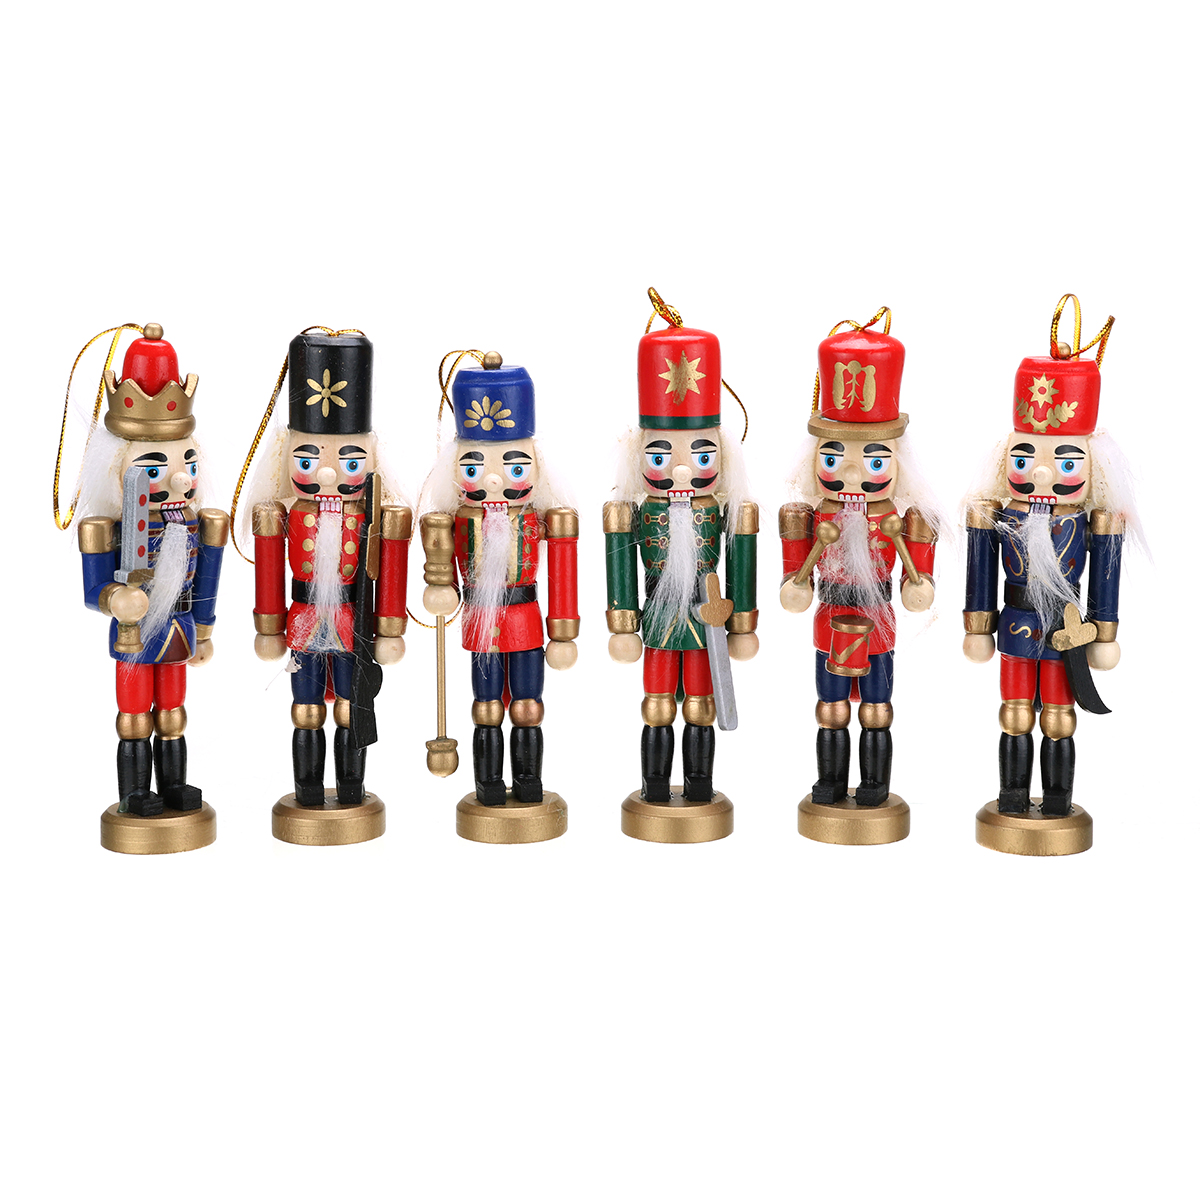 Wooden-Nutcracker-Doll-Soldier-Vintage-Handcraft-Decoration-Christmas-Gifts-1787904-5